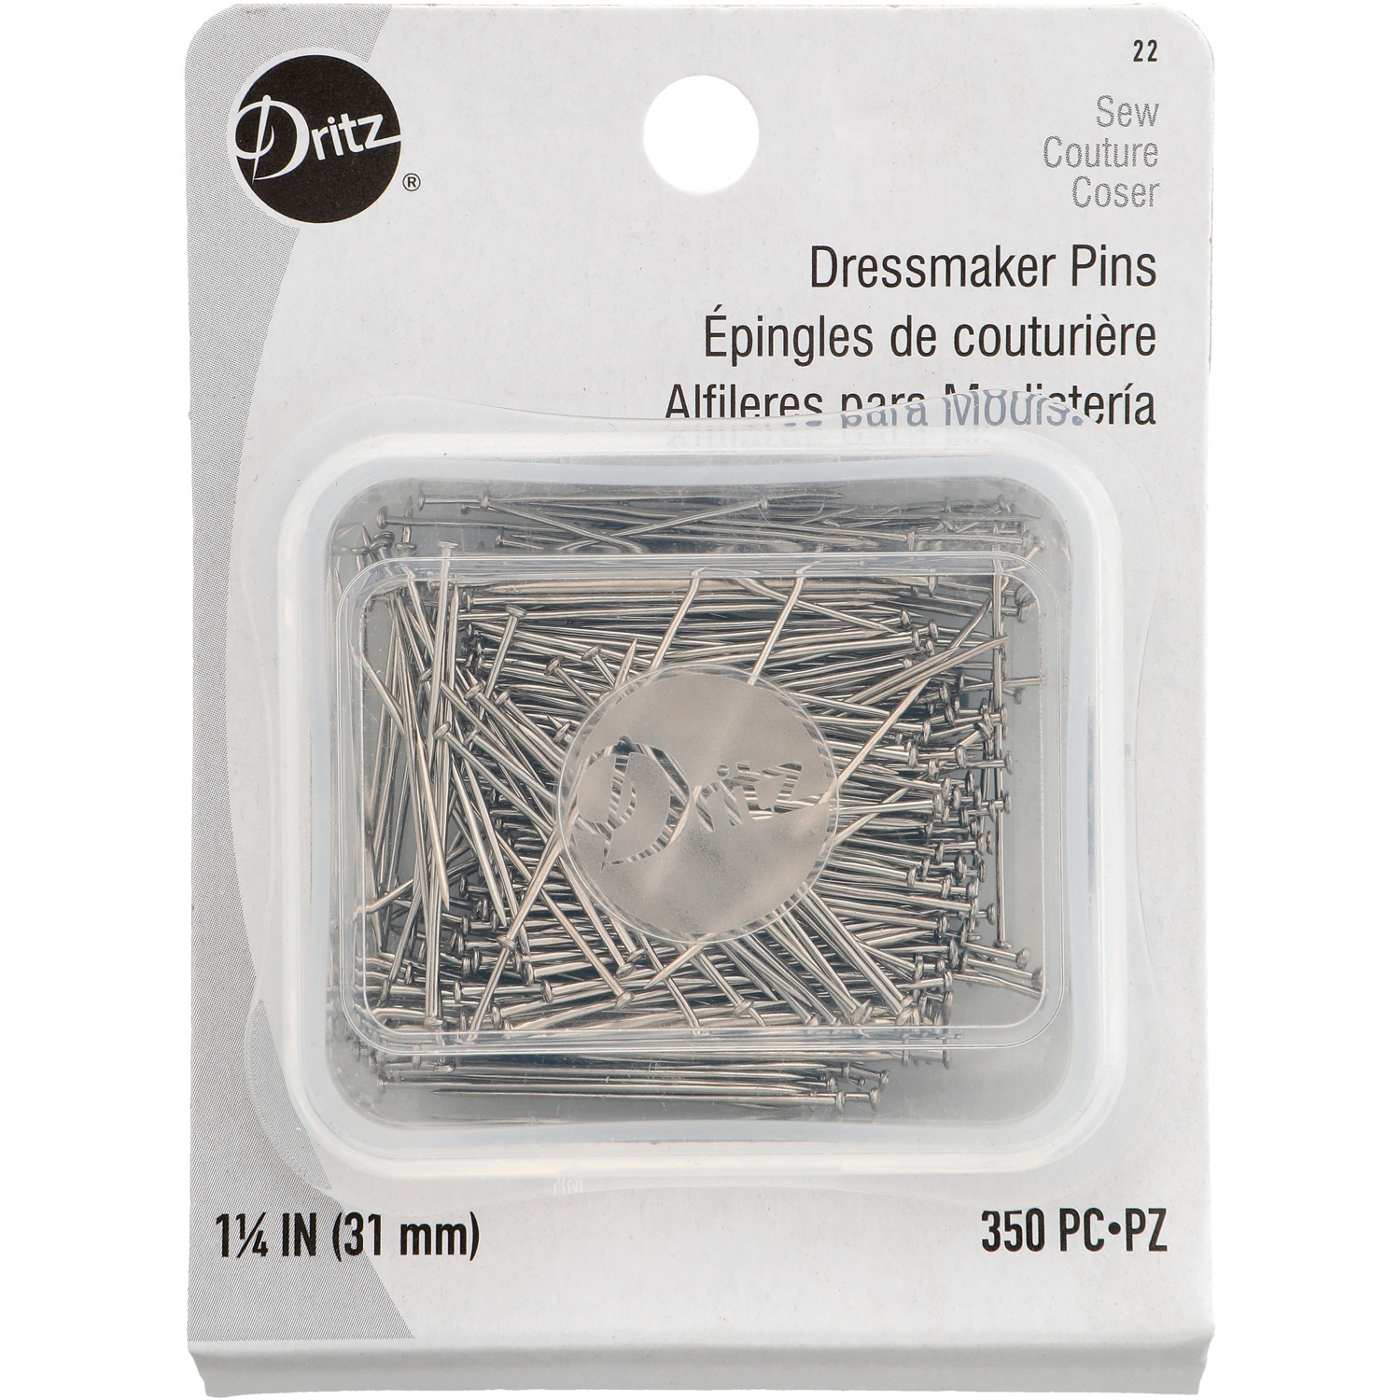 Dritz Dressmaker Pins, 350 Pc; image 1 of 4